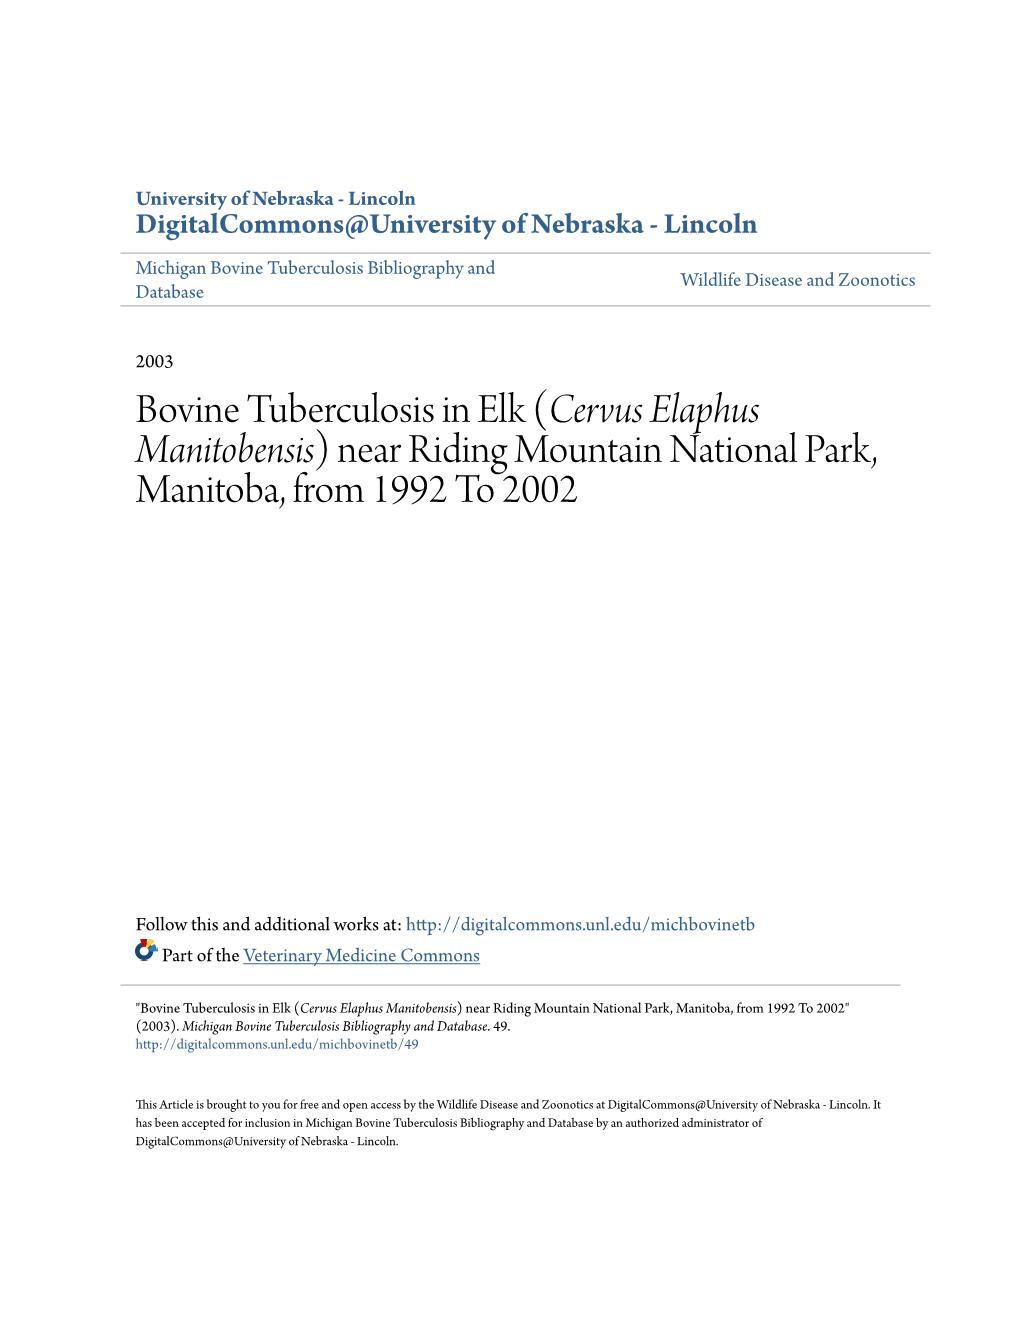 Bovine Tuberculosis in Elk (Cervus Elaphus Manitobensis) Near Riding Mountain National Park, Manitoba, from 1992 to 2002